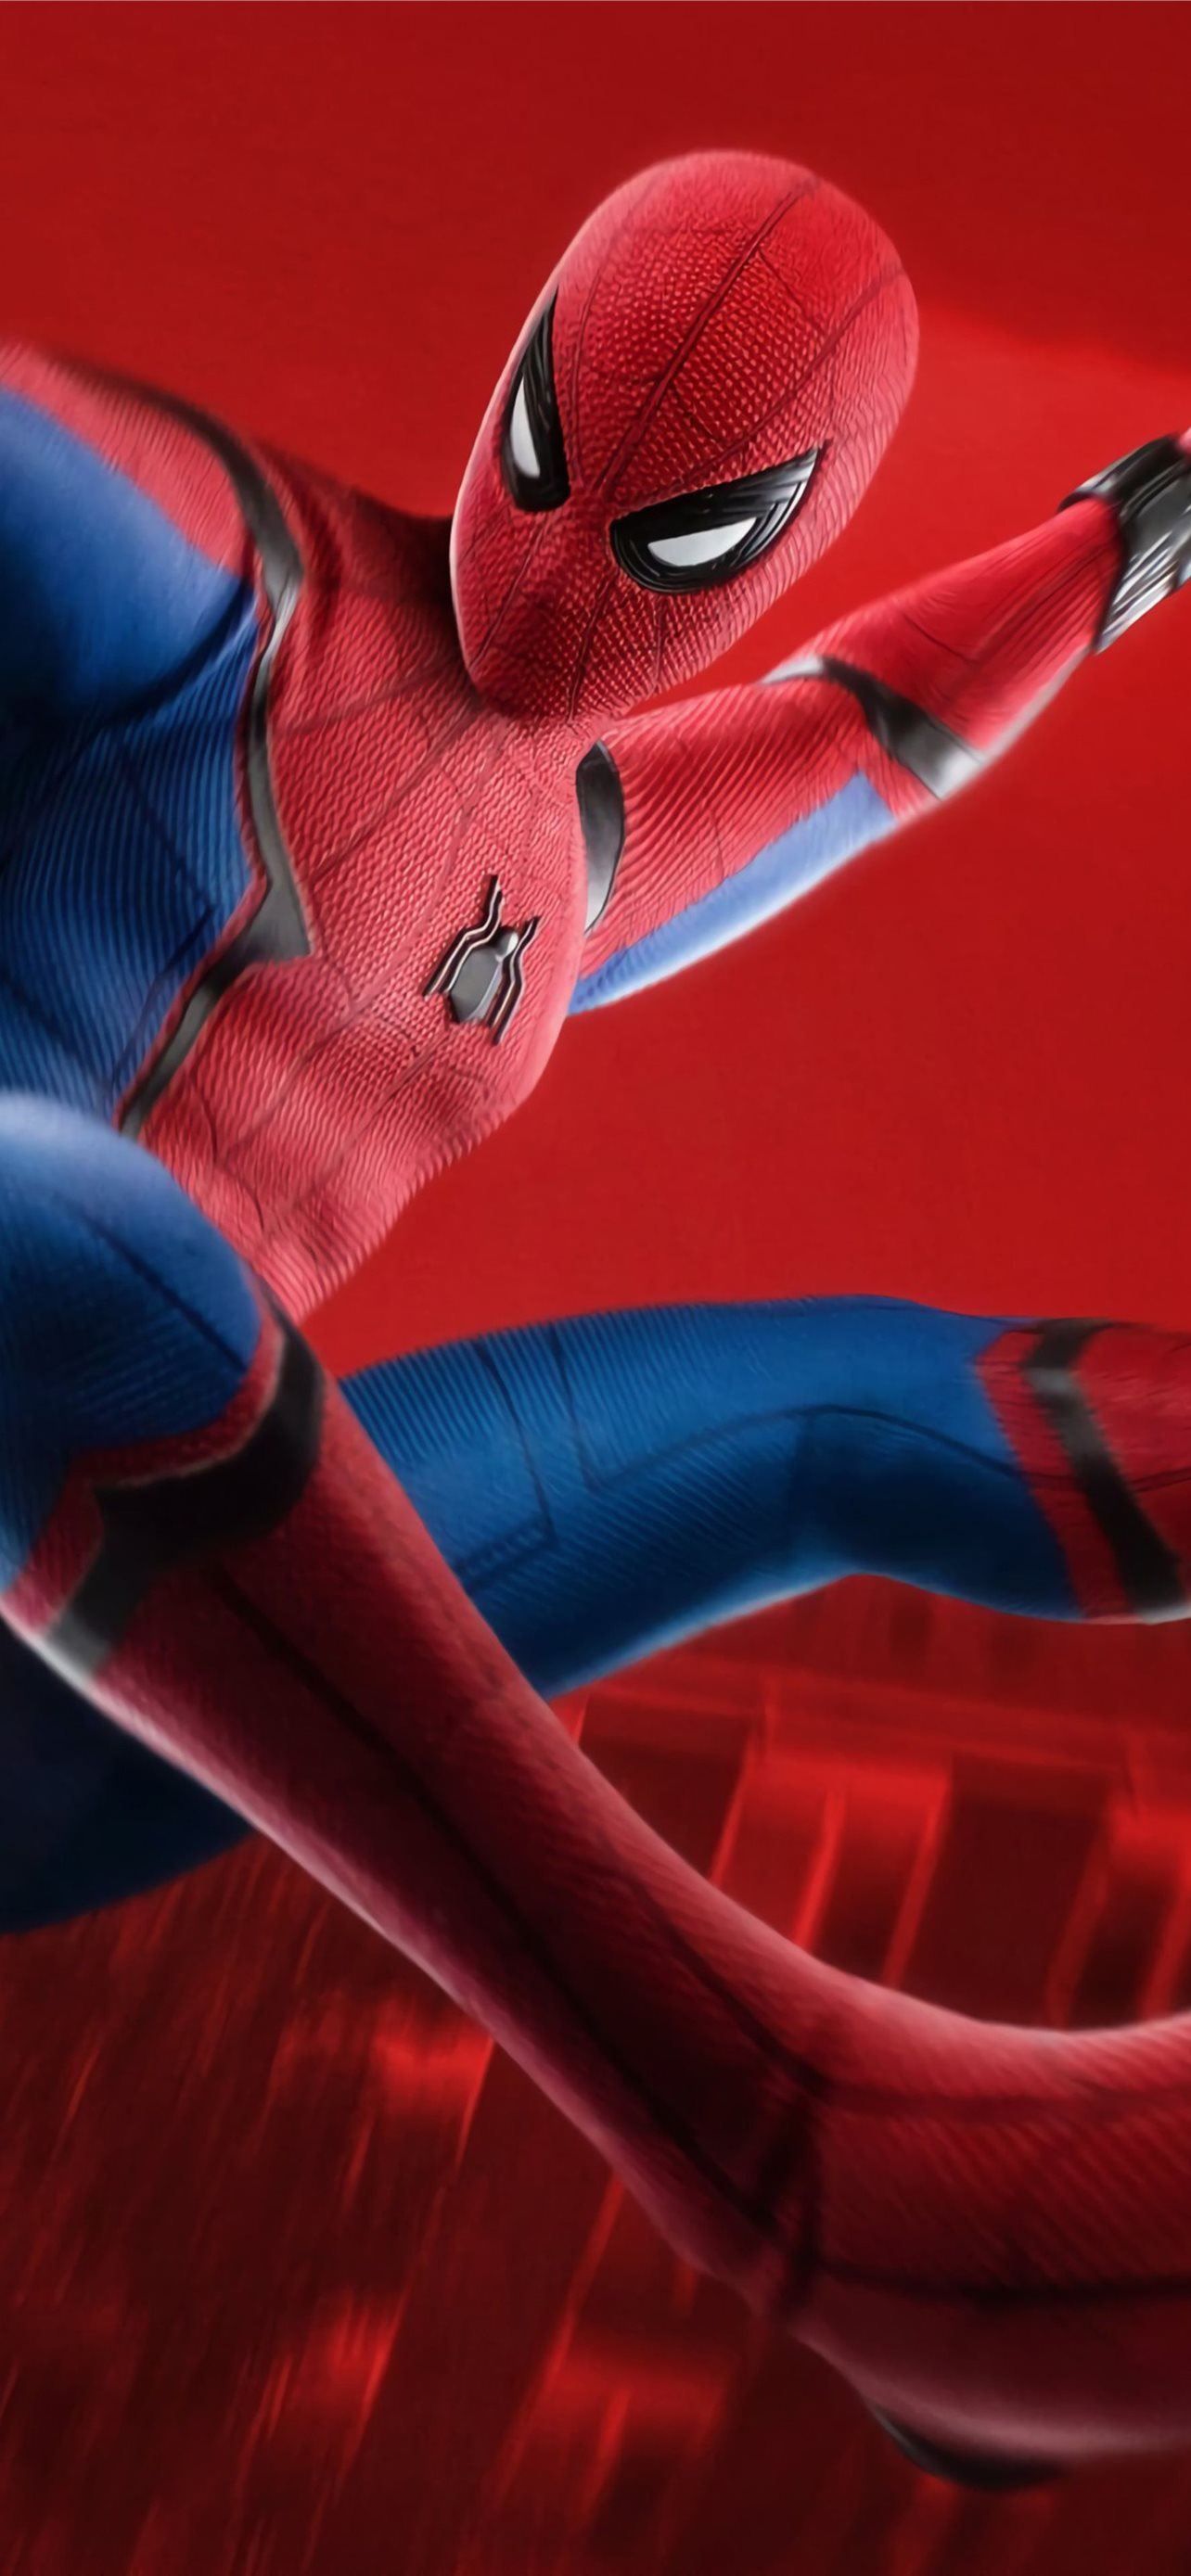 MCU Spider-Man iPhone Wallpapers - Wallpaper Cave